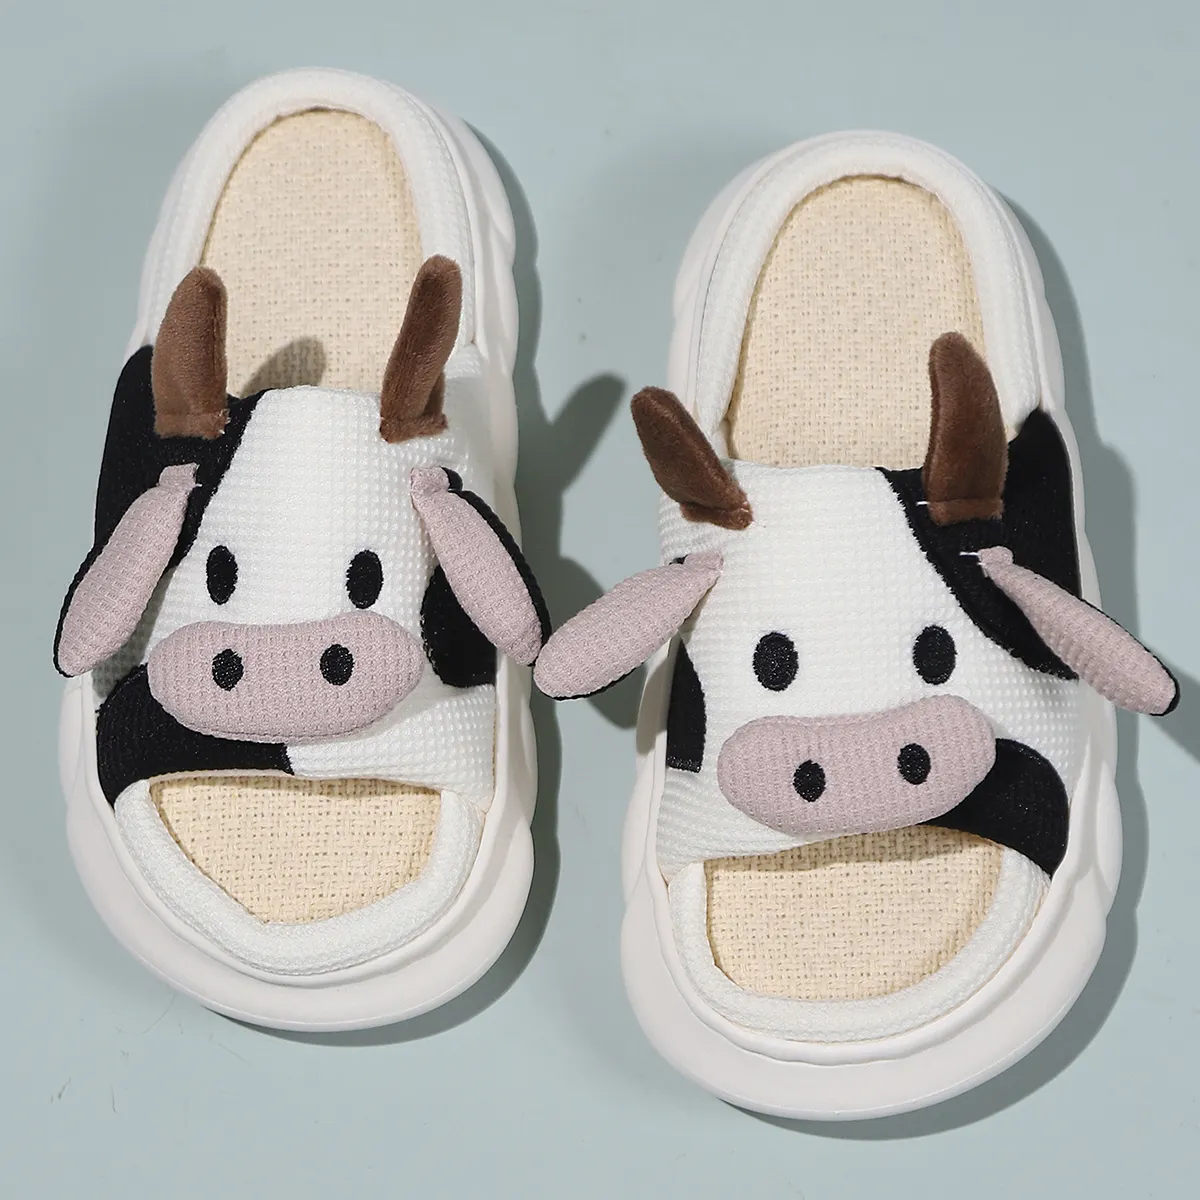 Sandal sapi untuk wanita, sepatu lucu tidak licin sol lembut Super hangat ringan